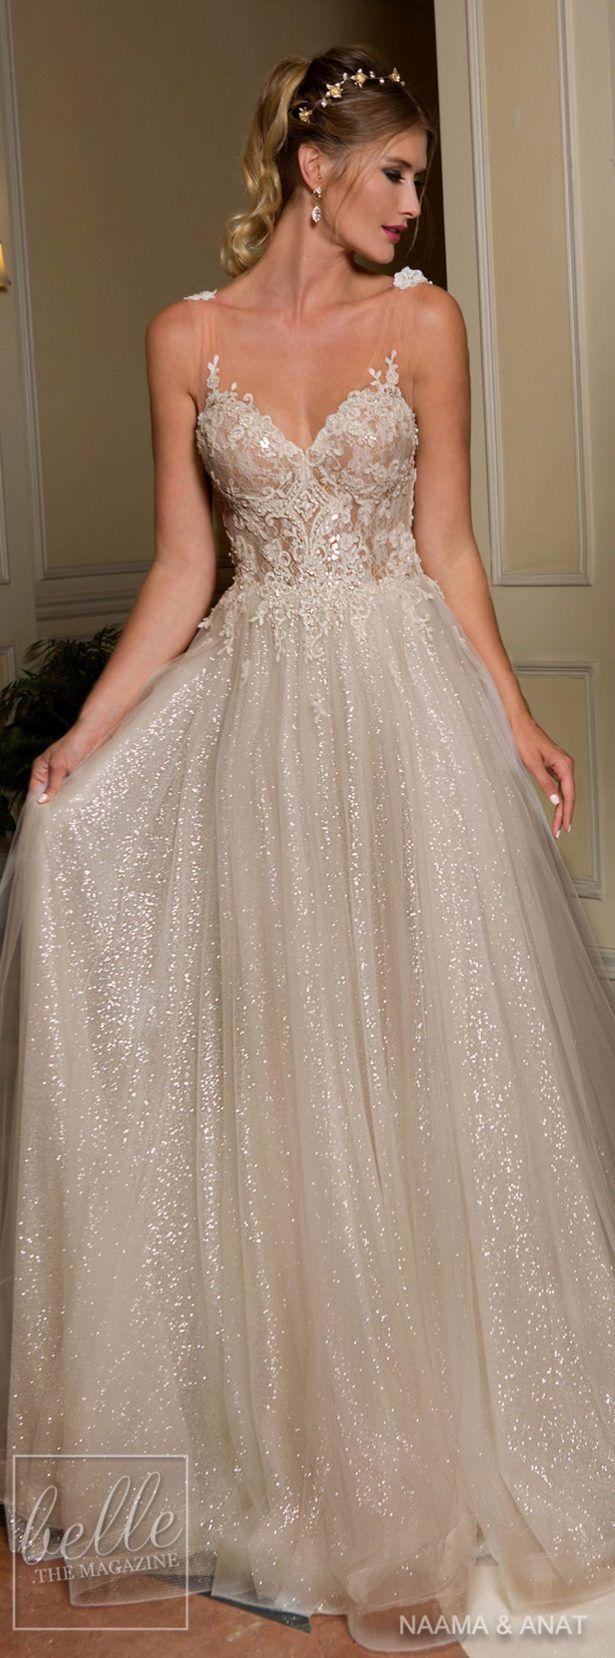 Hochzeit - Naama & Anat 2018 Wedding Dresses - "Starlight" Bridal Collection